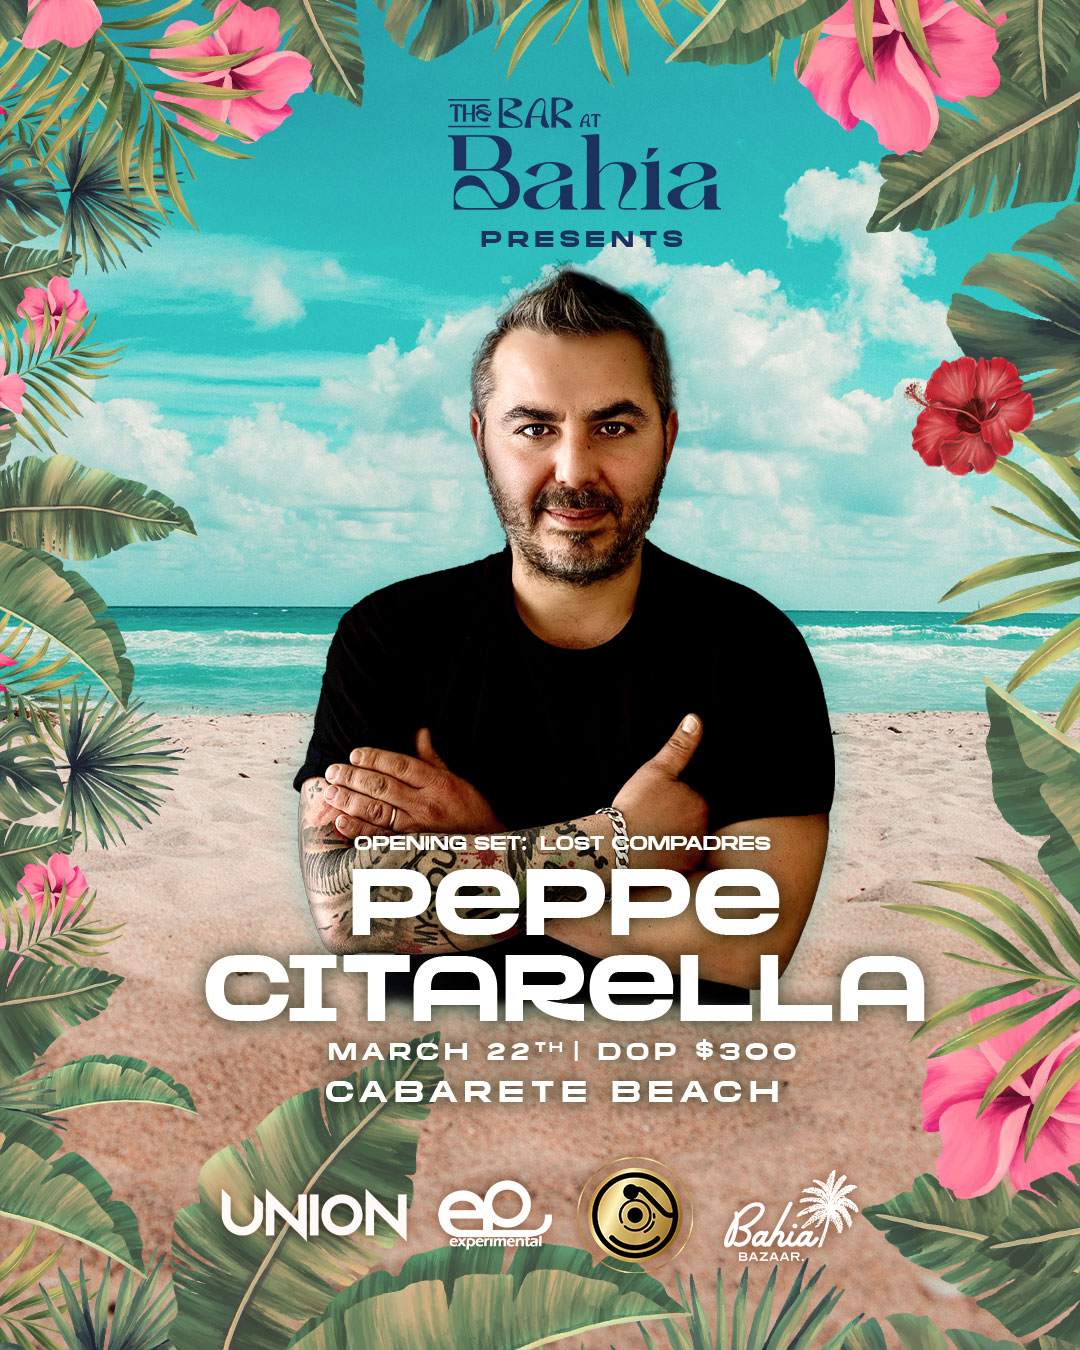 Peppe Citarella @t The Bar at Bahia, Cabarete Beach - フライヤー表